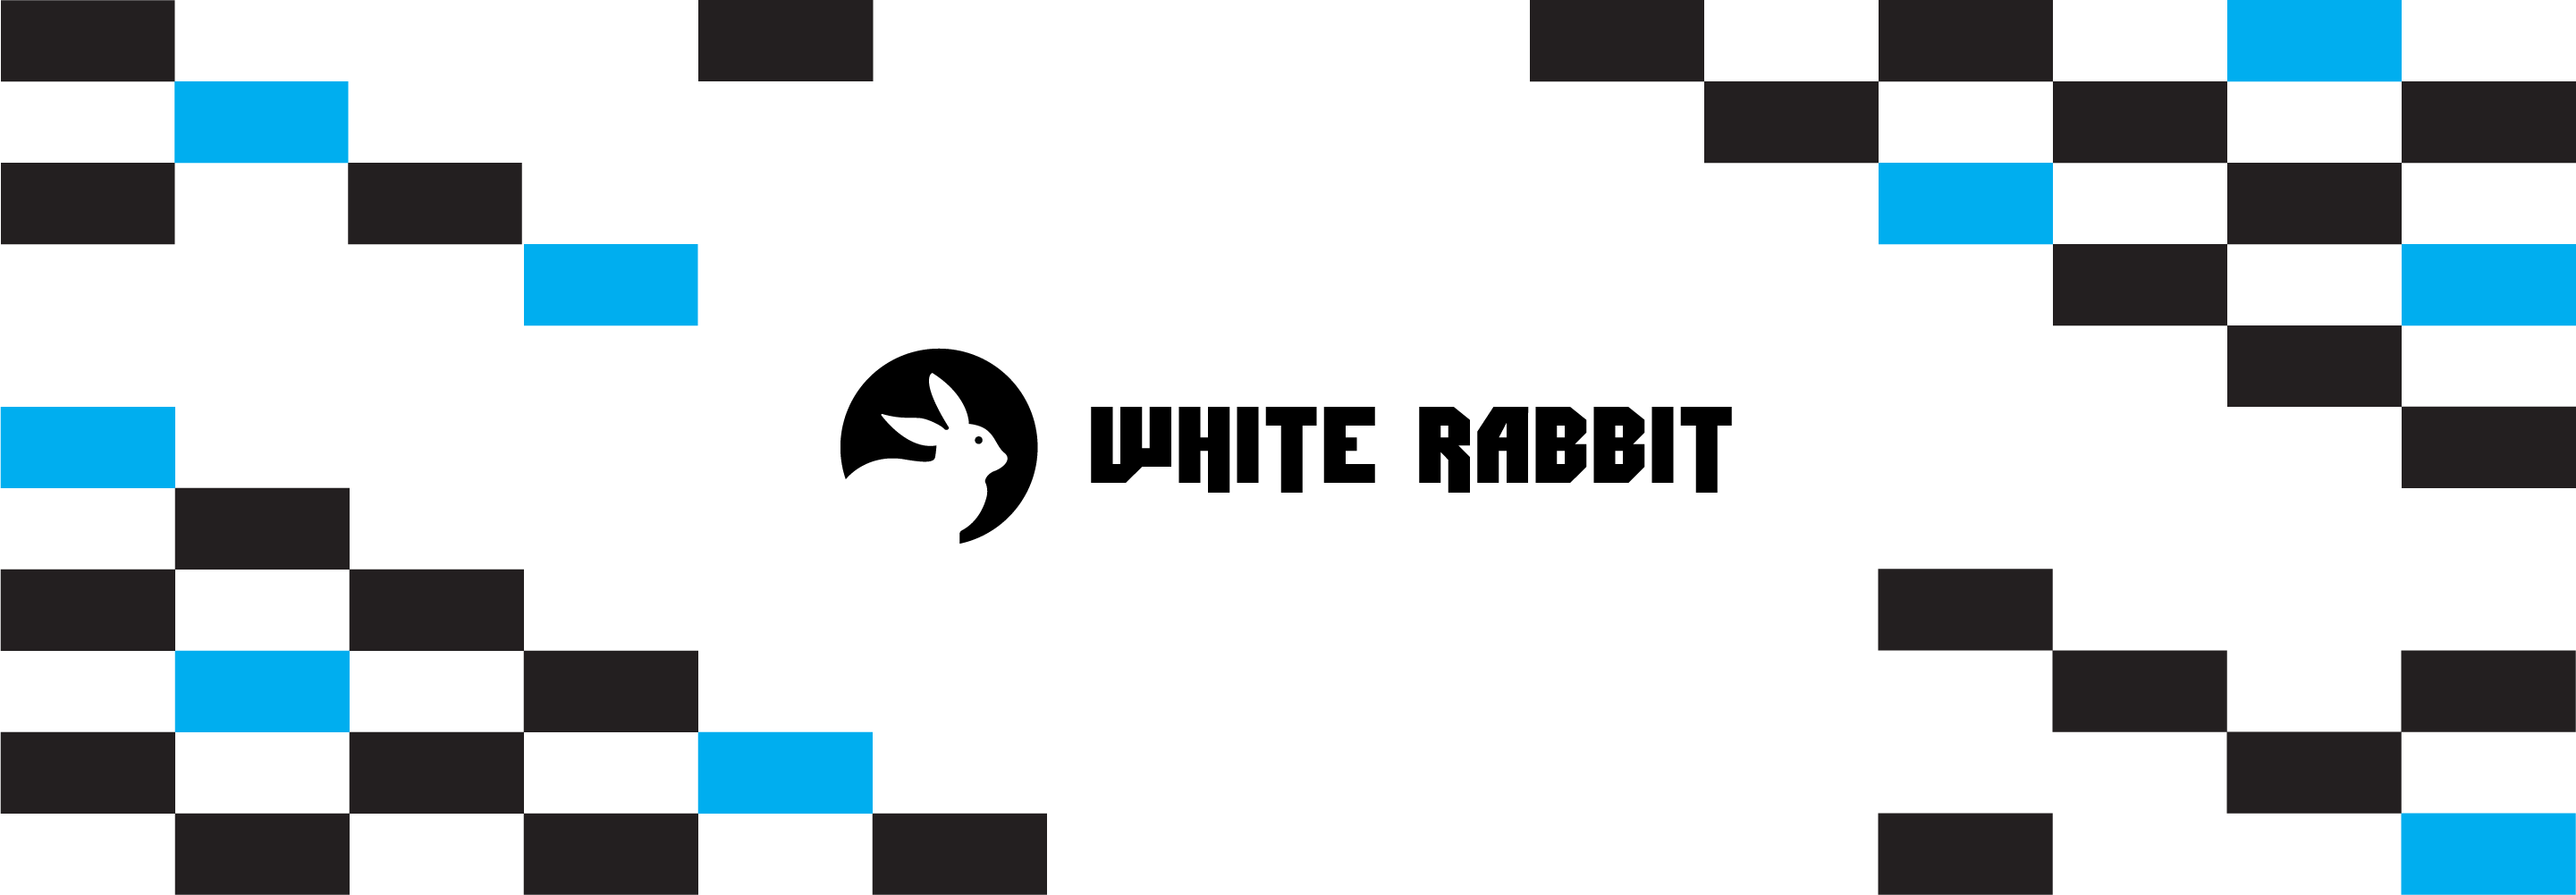 White Rabbit Intel logo